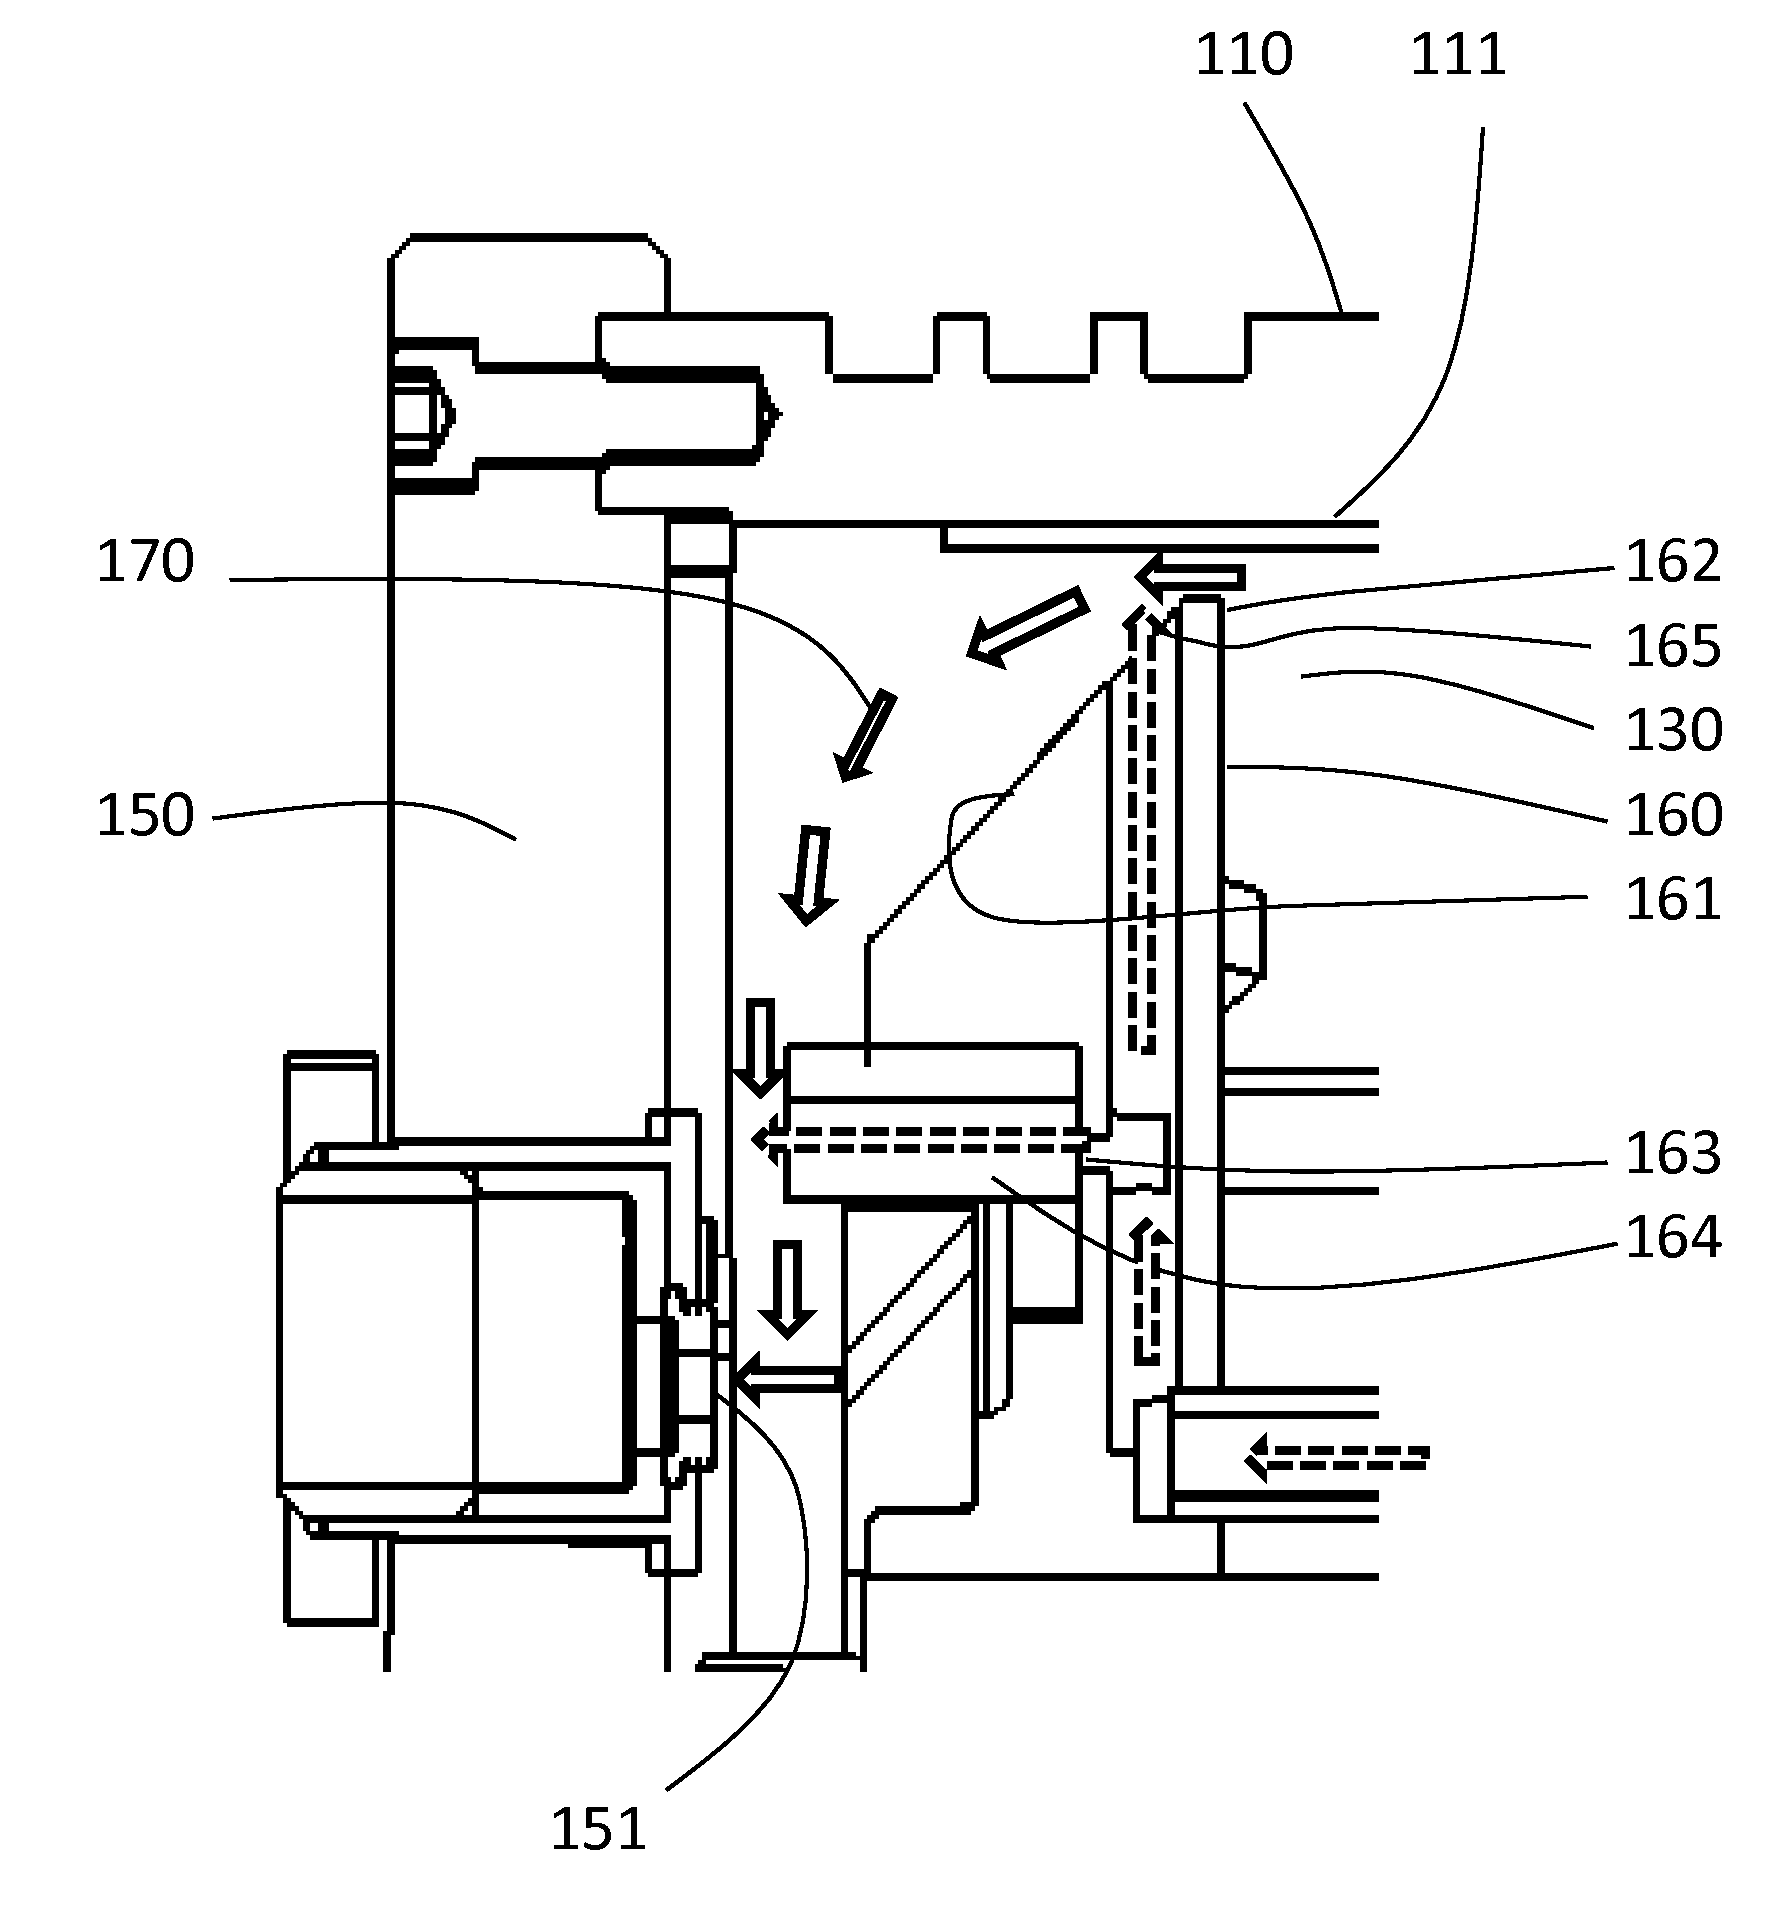 Centrifugal liquid separation machine using pressurized air to promote solids transport